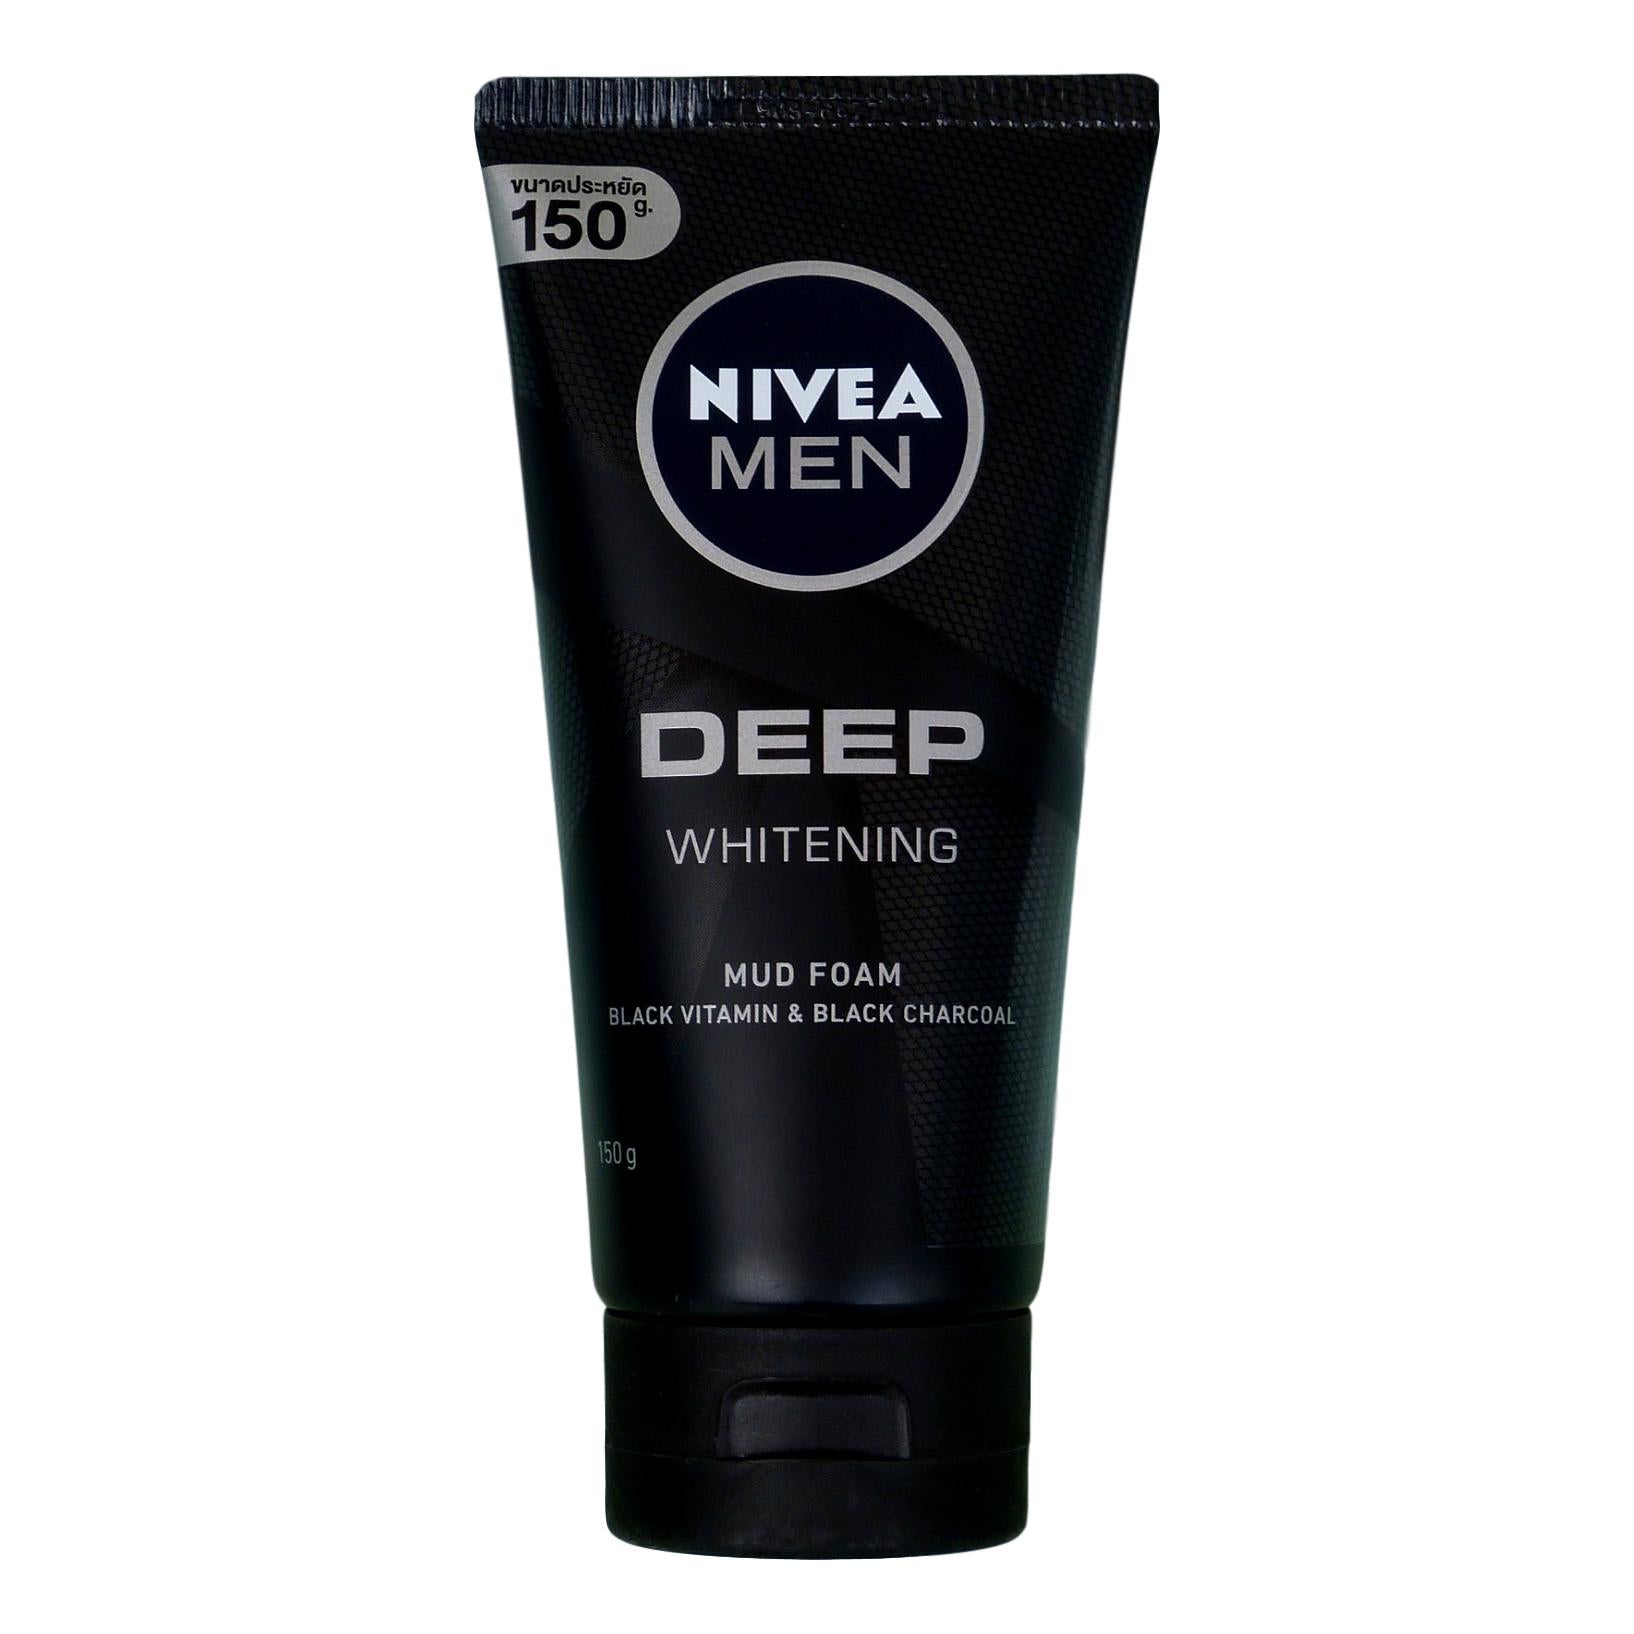 Nivea Men Deep Whitening Mud Foam Charcoal 150g - Asian Beauty Supply